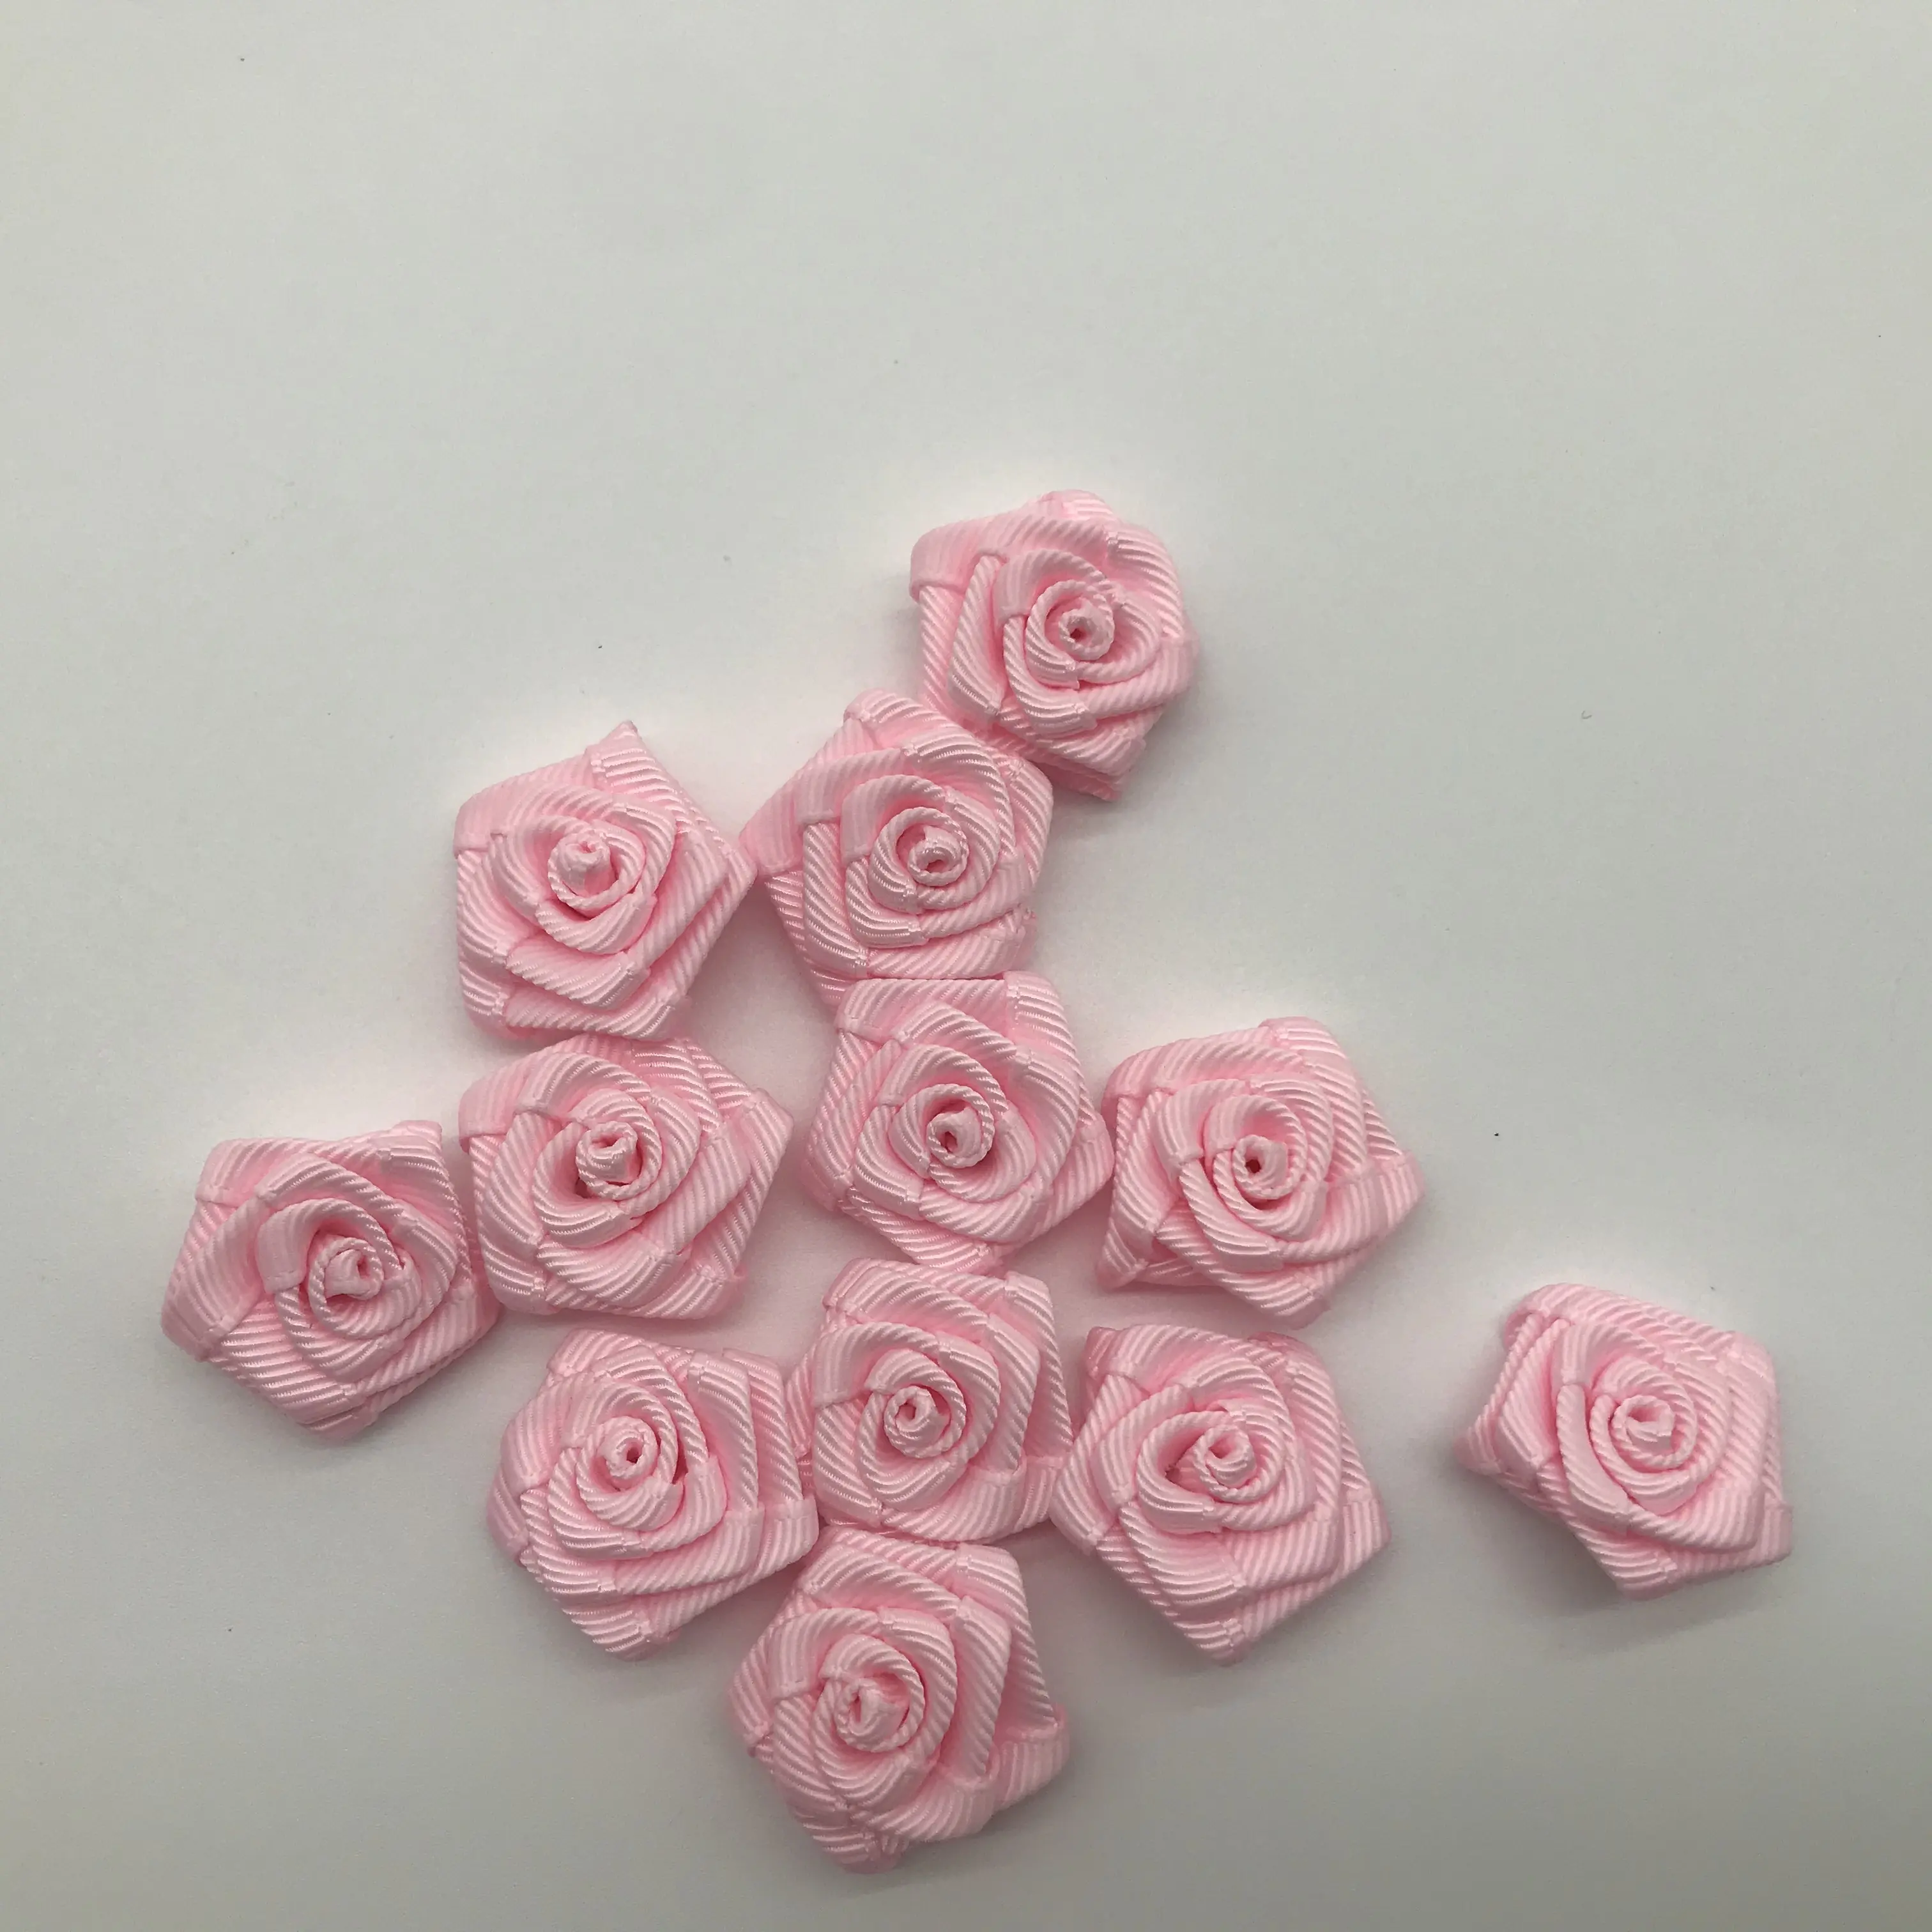 Jc 15 Mm Groene Grosrain Lint Rozet Mini Satin Bloemen Satin Rose Bouquetgold Broches Voor Bruiloft Decoratie